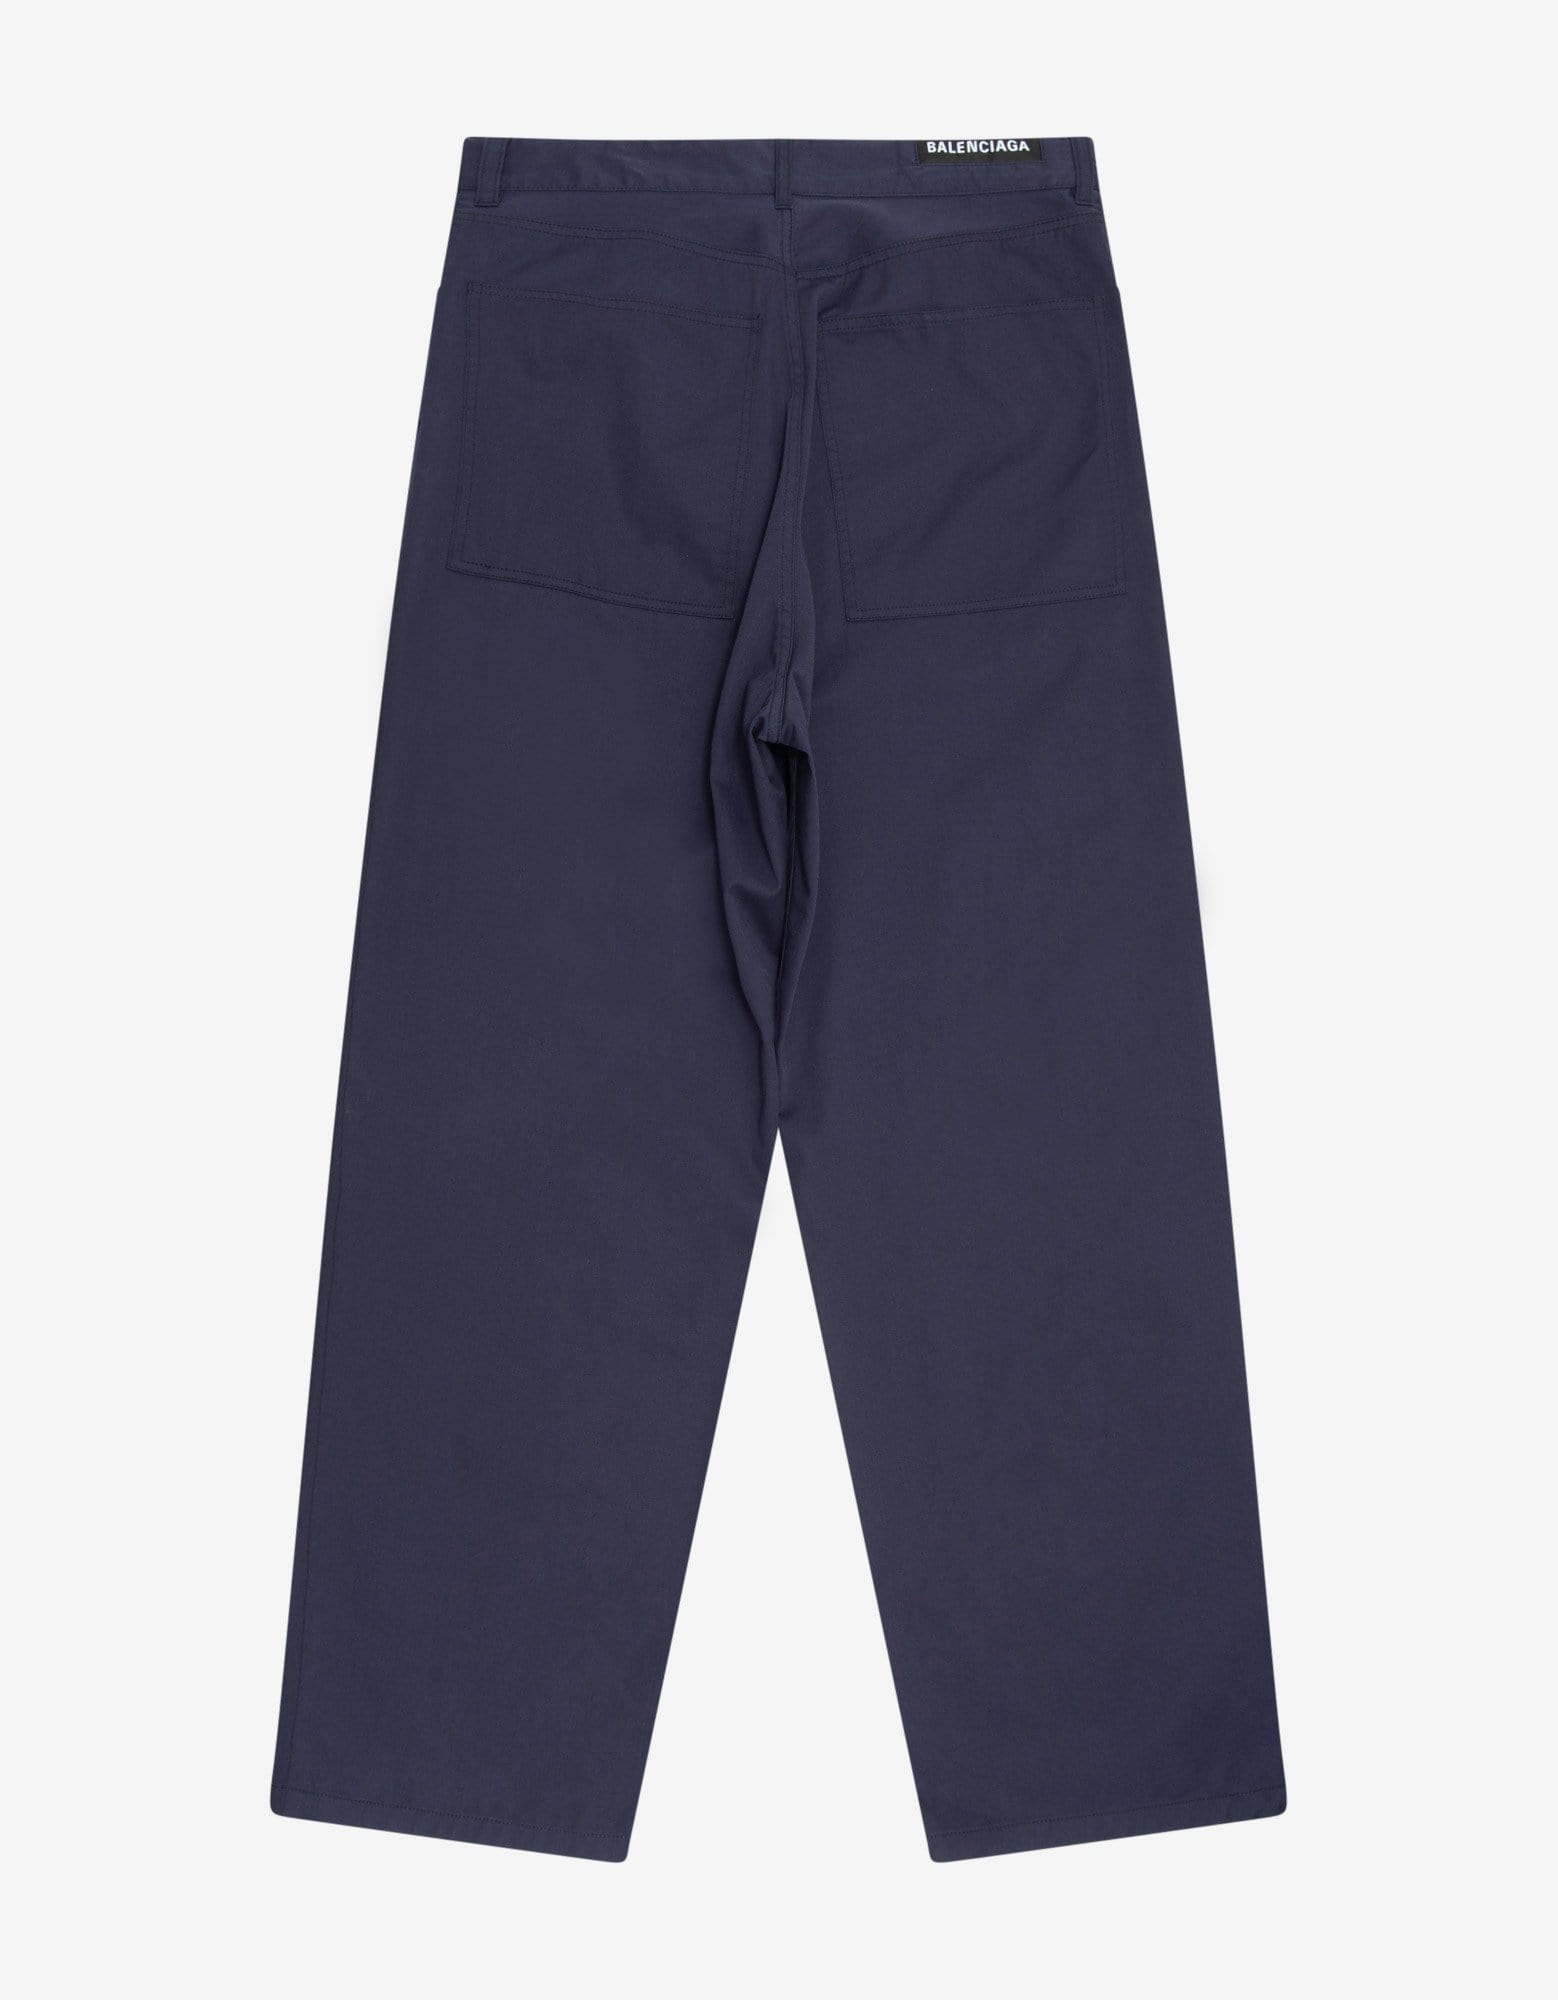 Balenciaga Navy Blue Baggy Chino Trousers – ZOOFASHIONS.COM